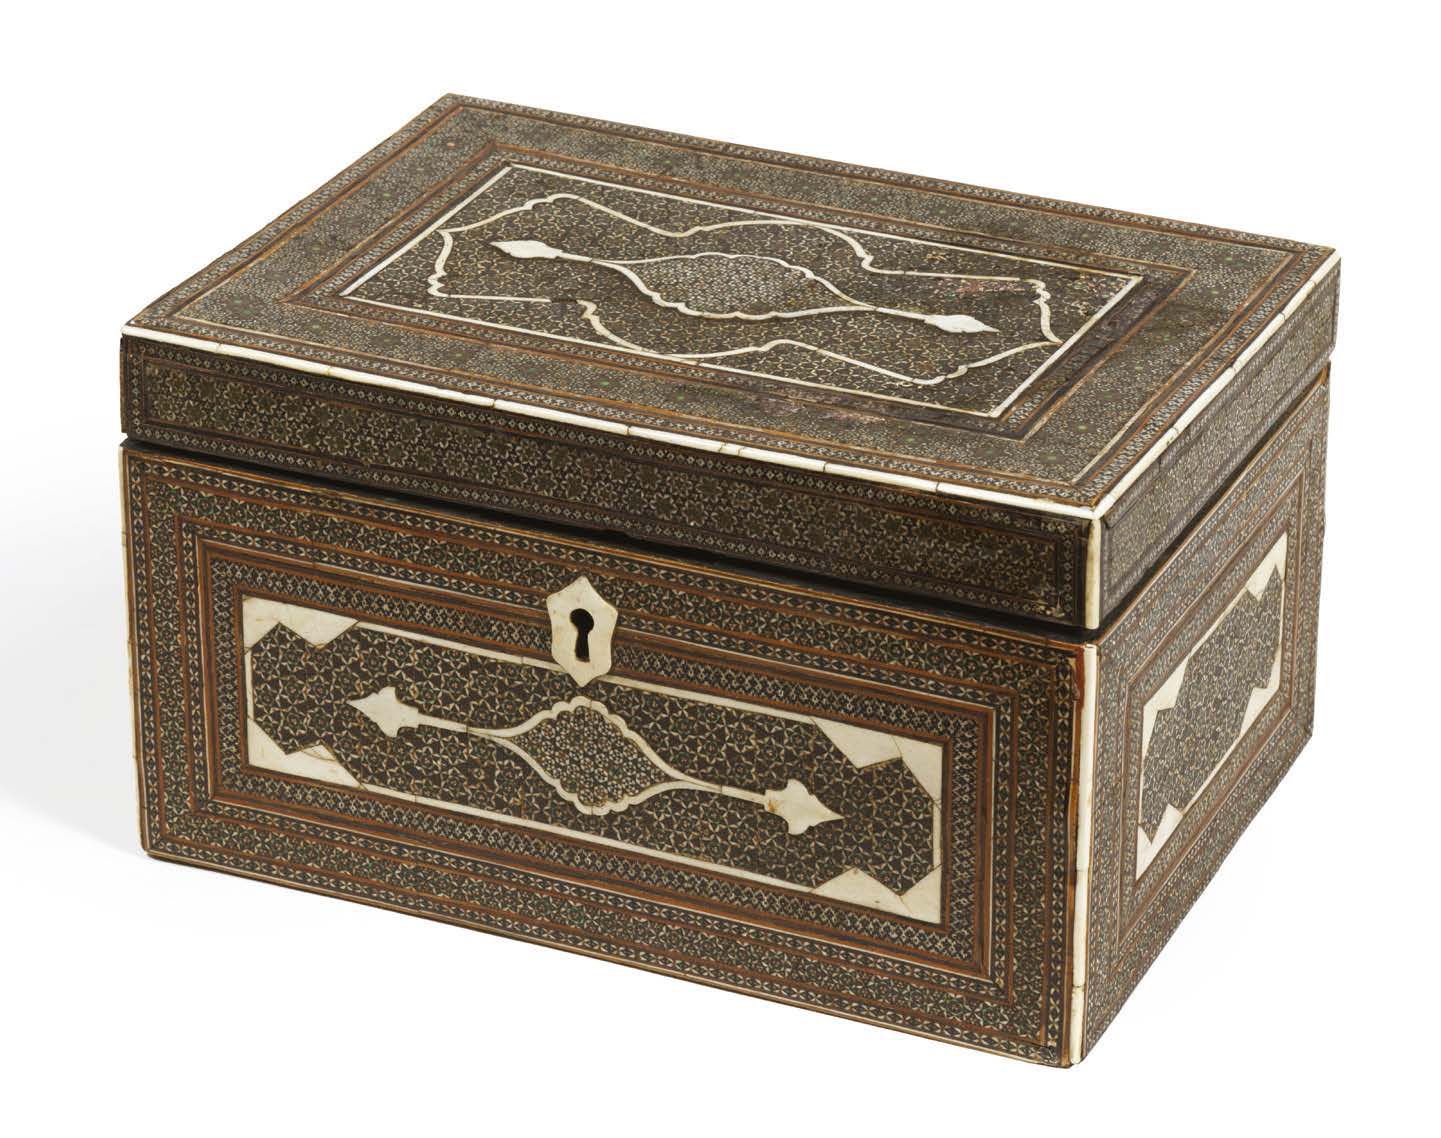 Null 波斯的卡塔姆卡里盒。
伊朗，19世纪。
H_18 cm W_32 cm D_21.5 cm
波斯盒子上镶嵌着被称为khatam kari的微型马赛克，&hellip;